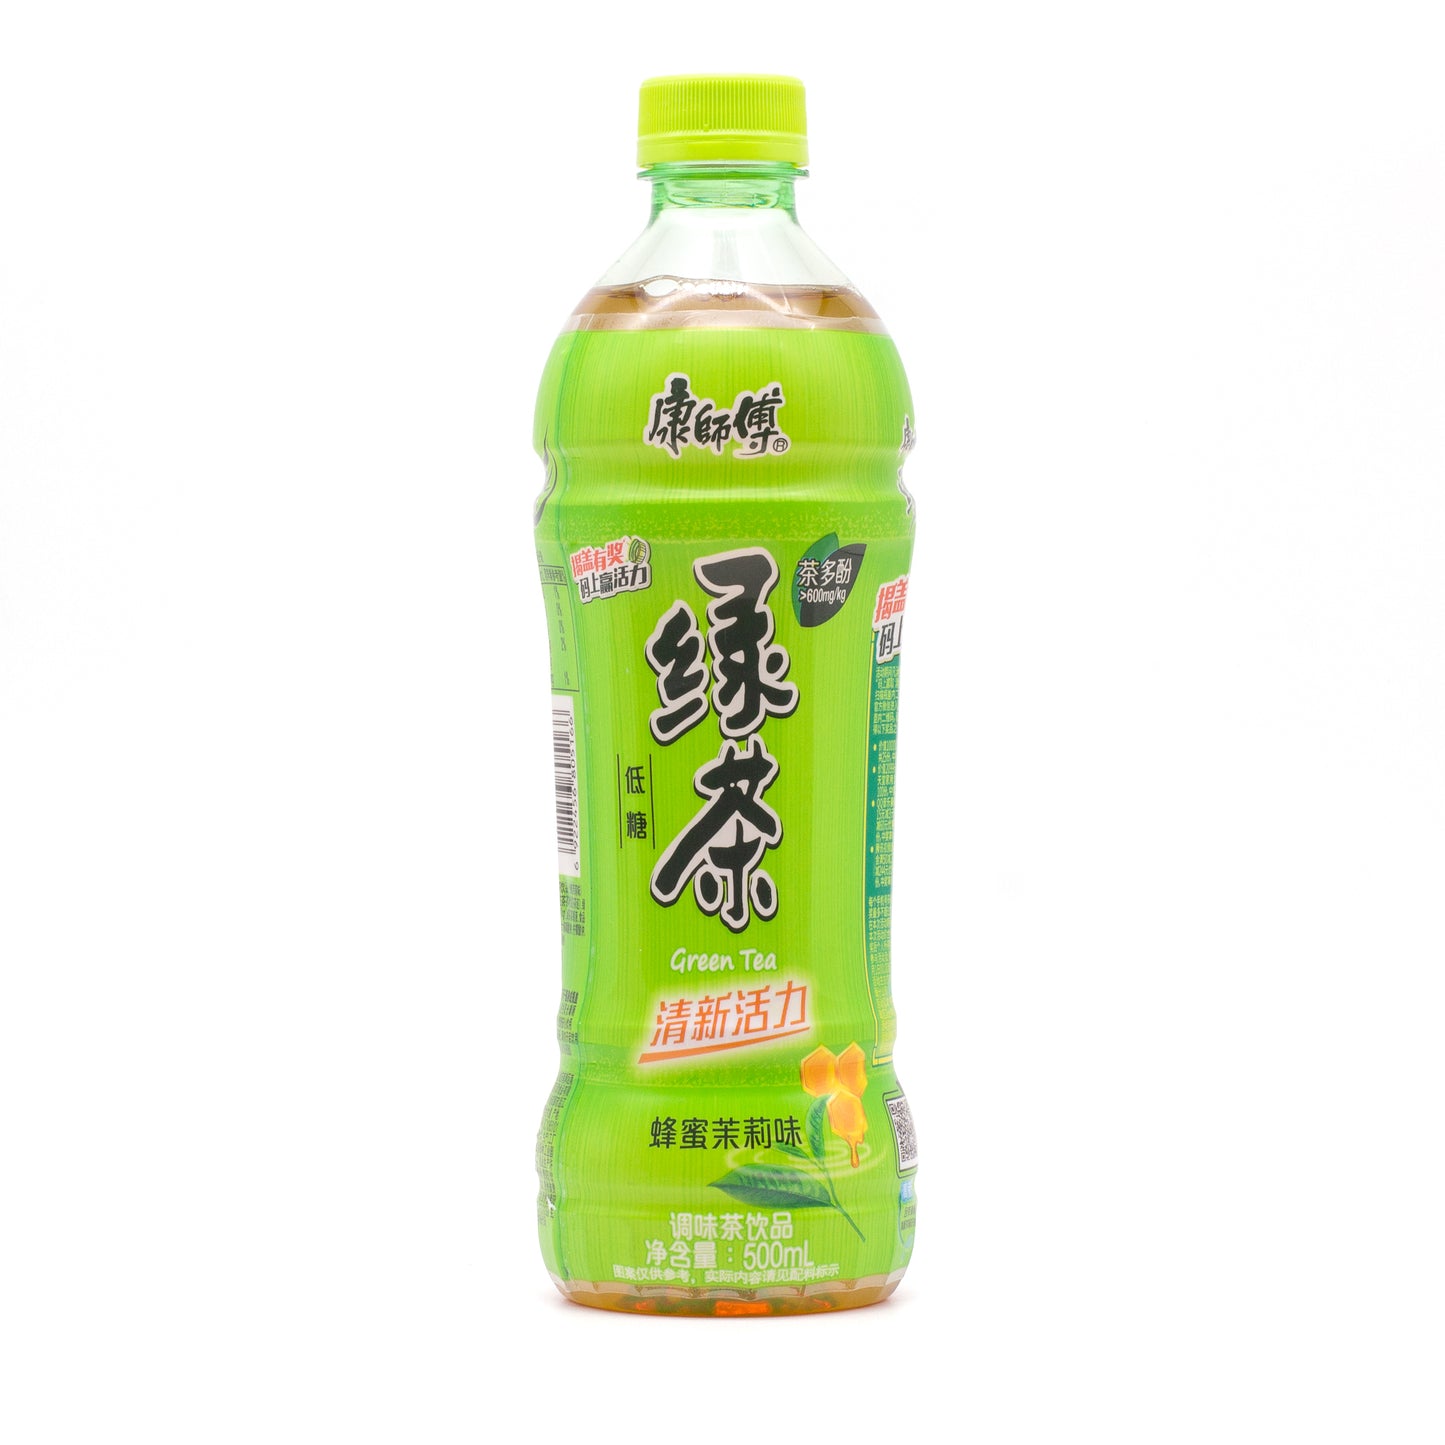 Master Kong Green Tea康师傅绿茶 (1 CASE, 15 BTLS)